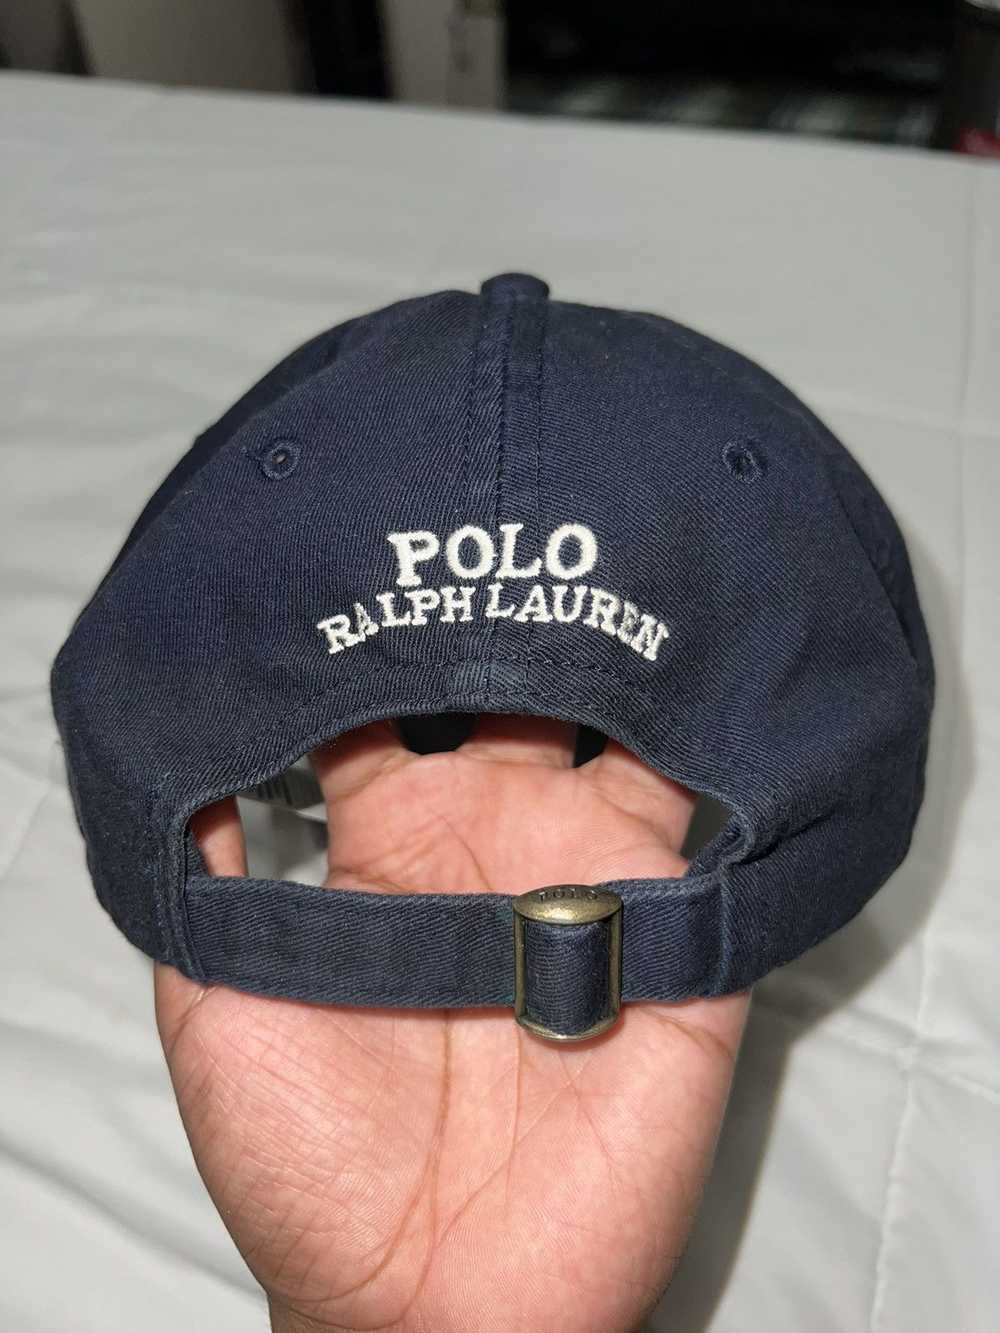 Polo Ralph Lauren Polo bear hat - image 2